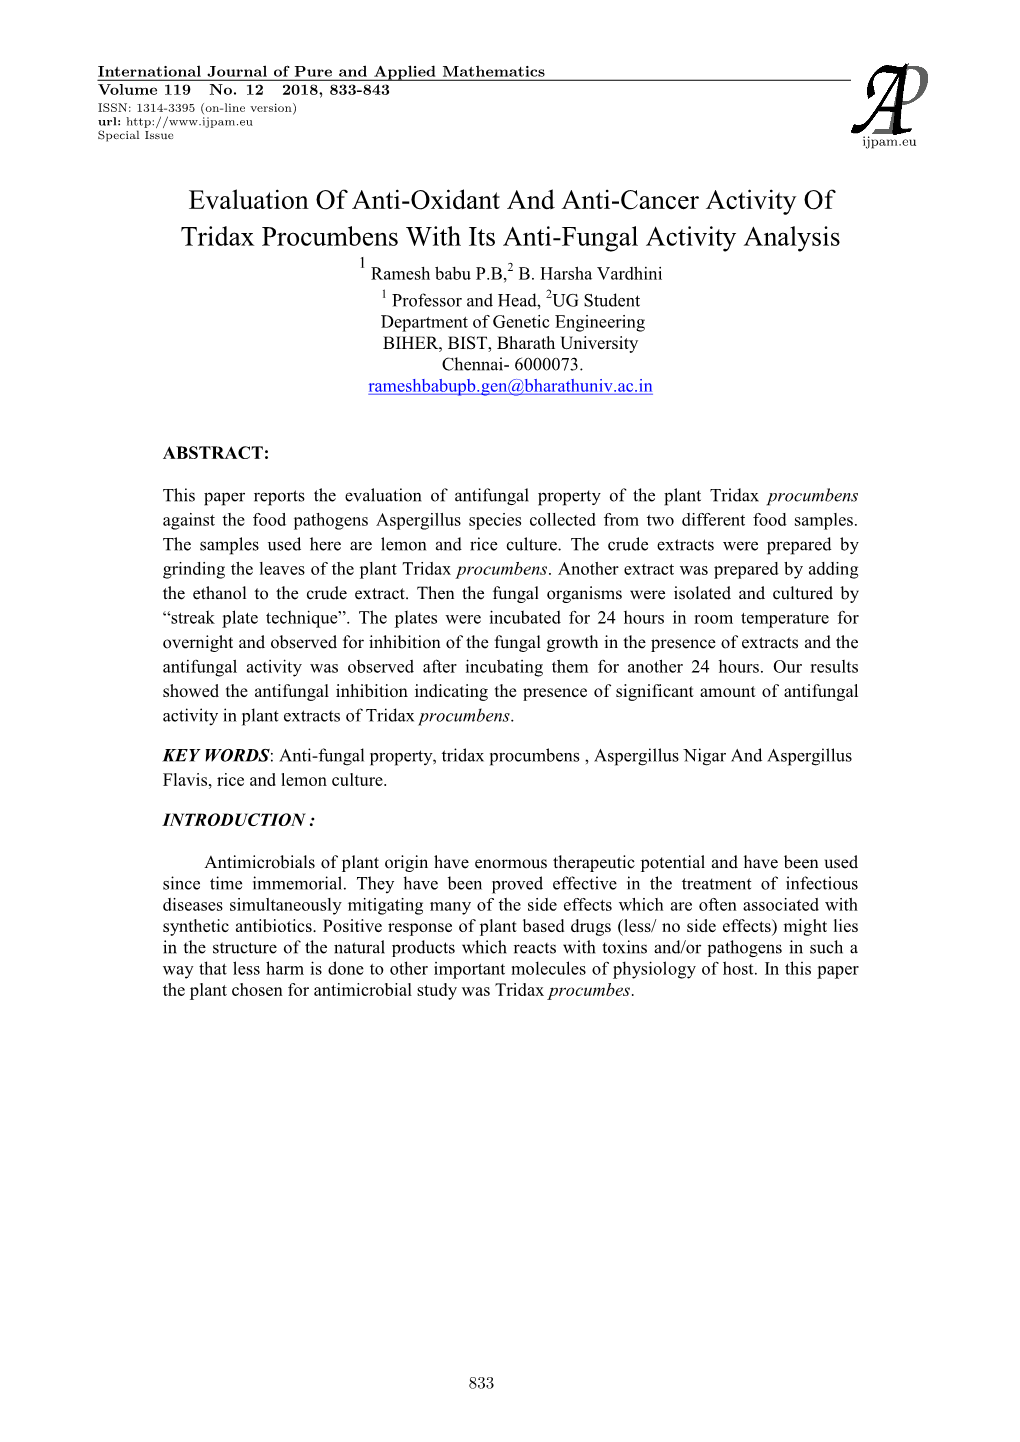 Evaluation of Anti-Oxidant and Anti-Cancer Activity of Tridax Procumbens with Its Anti-Fungal Activity Analysis 1 Ramesh Babu P.B,2 B